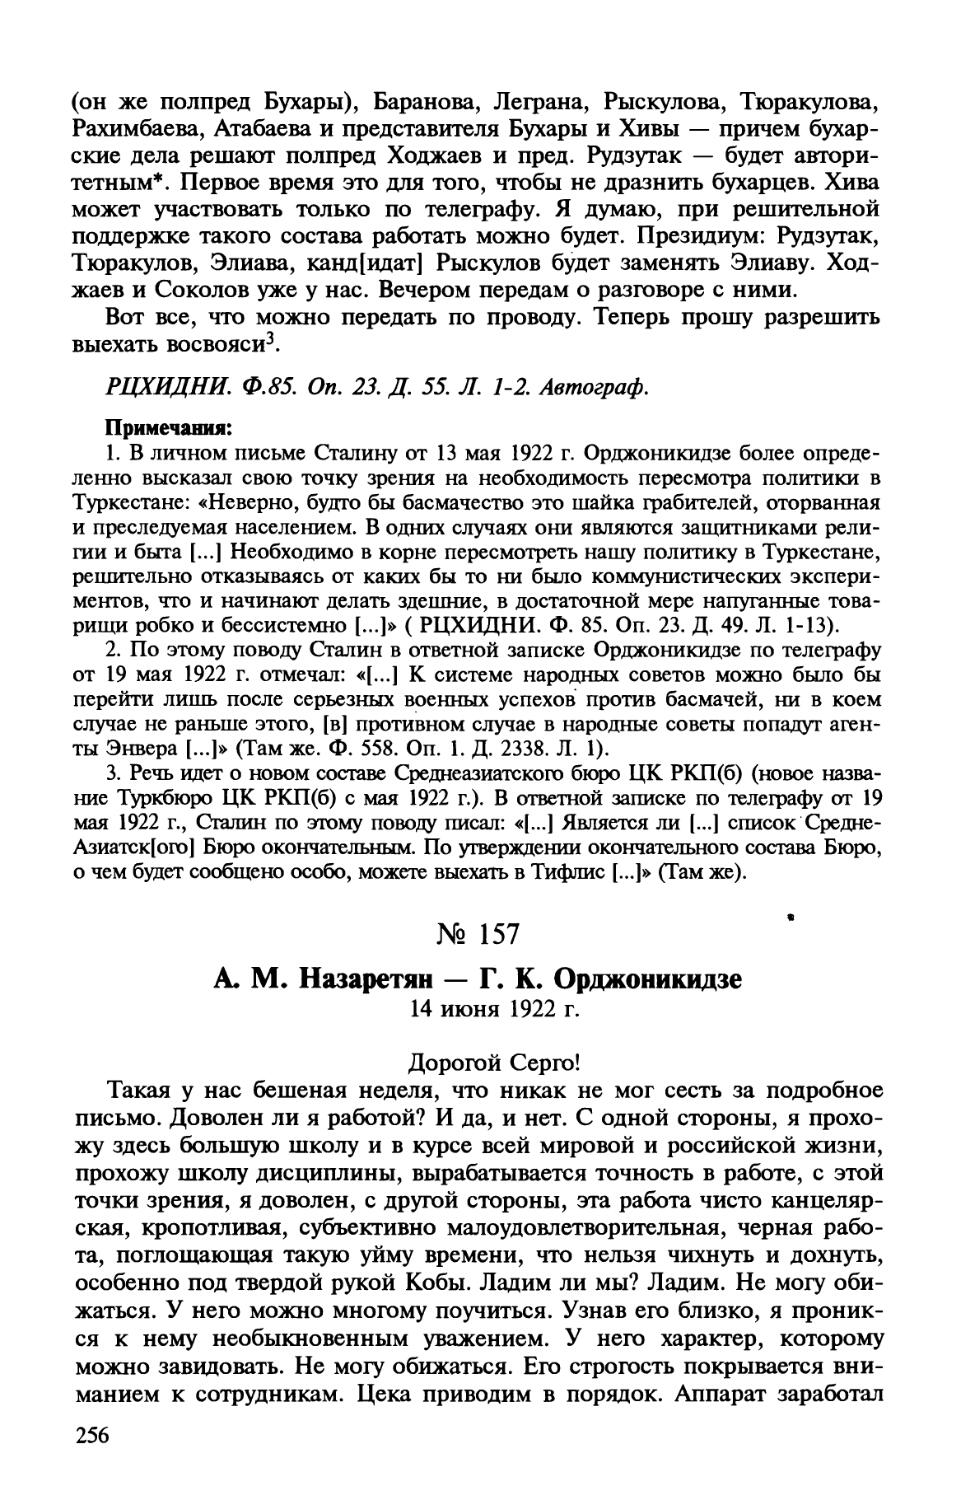 157. А. М. Назаретян — Г. К. Орджоникидзе. 14 июня 1922 г.